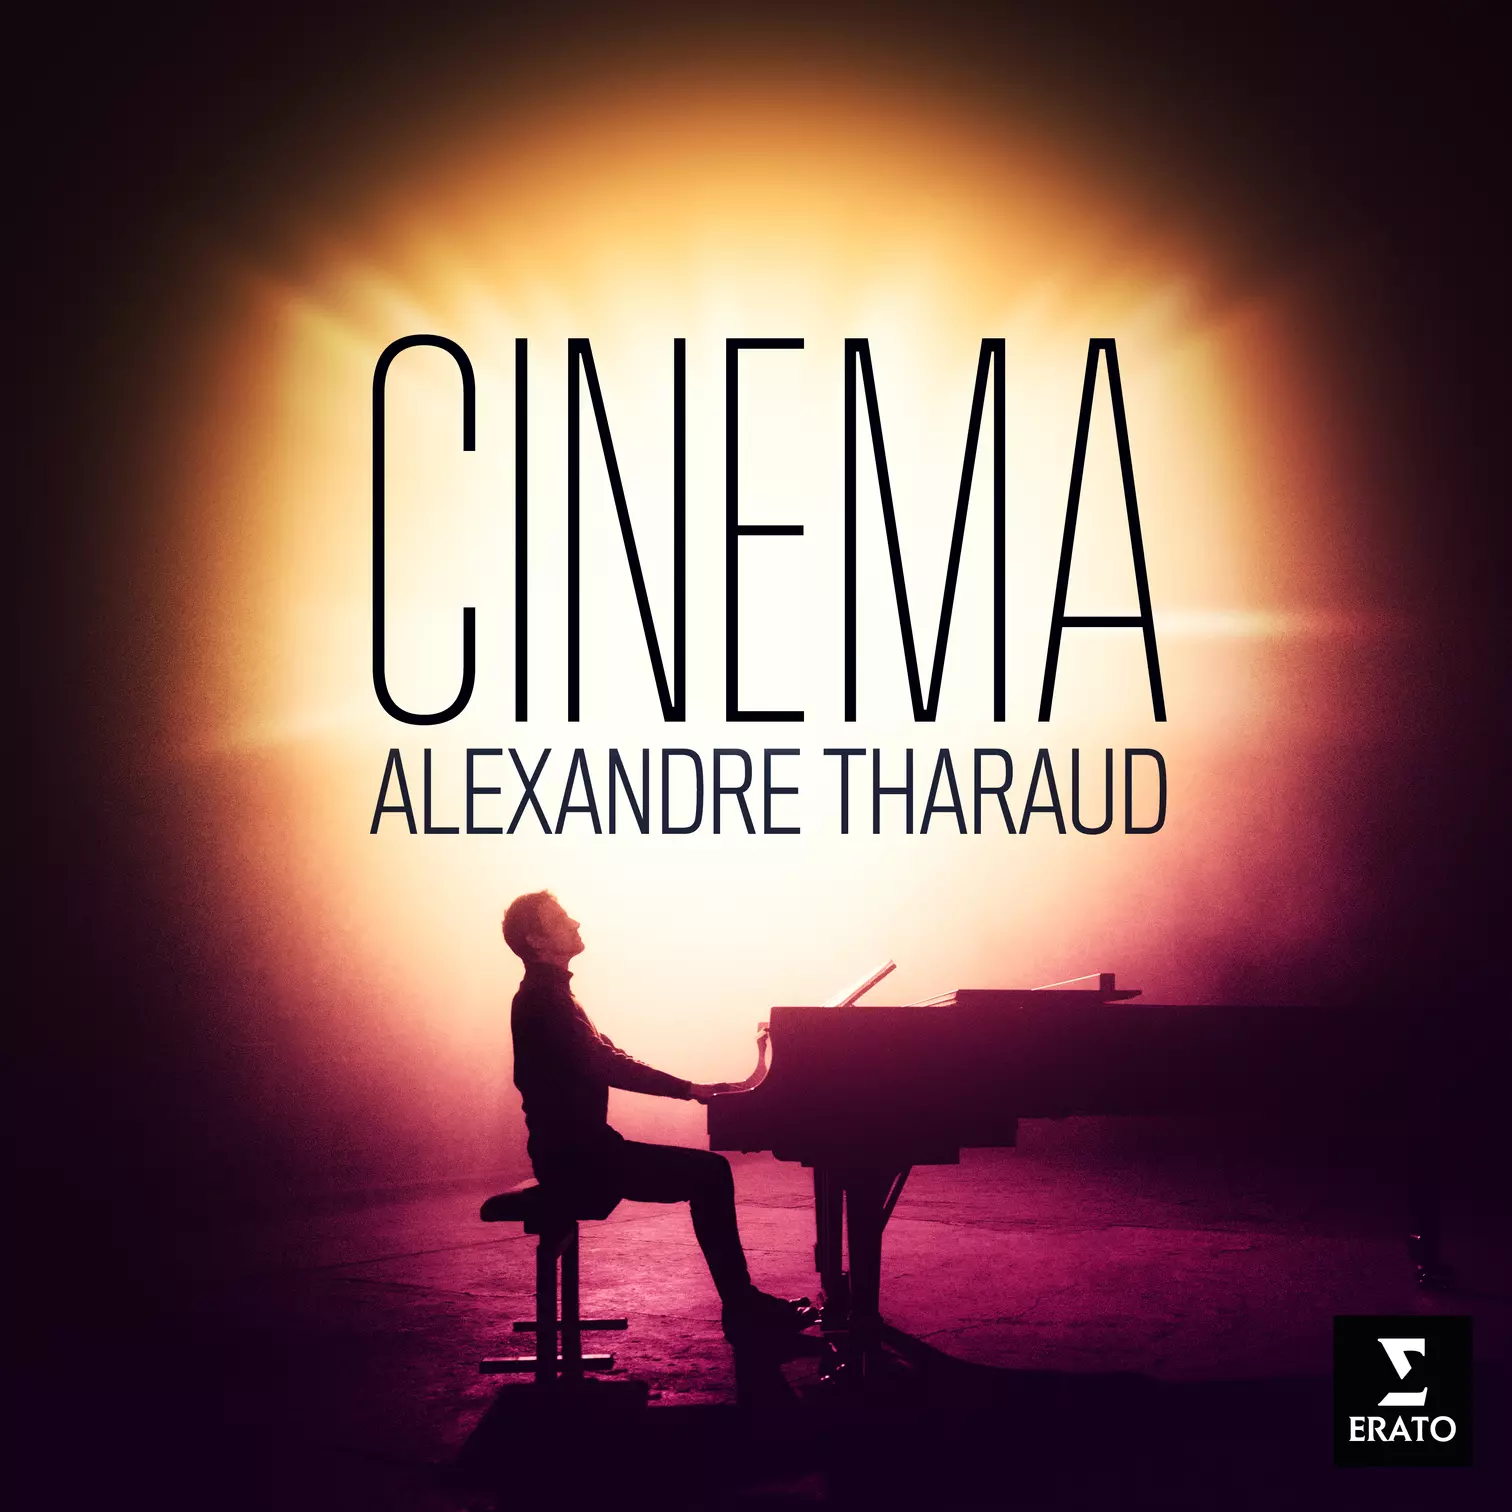 Cinema Alexandre Tharaud